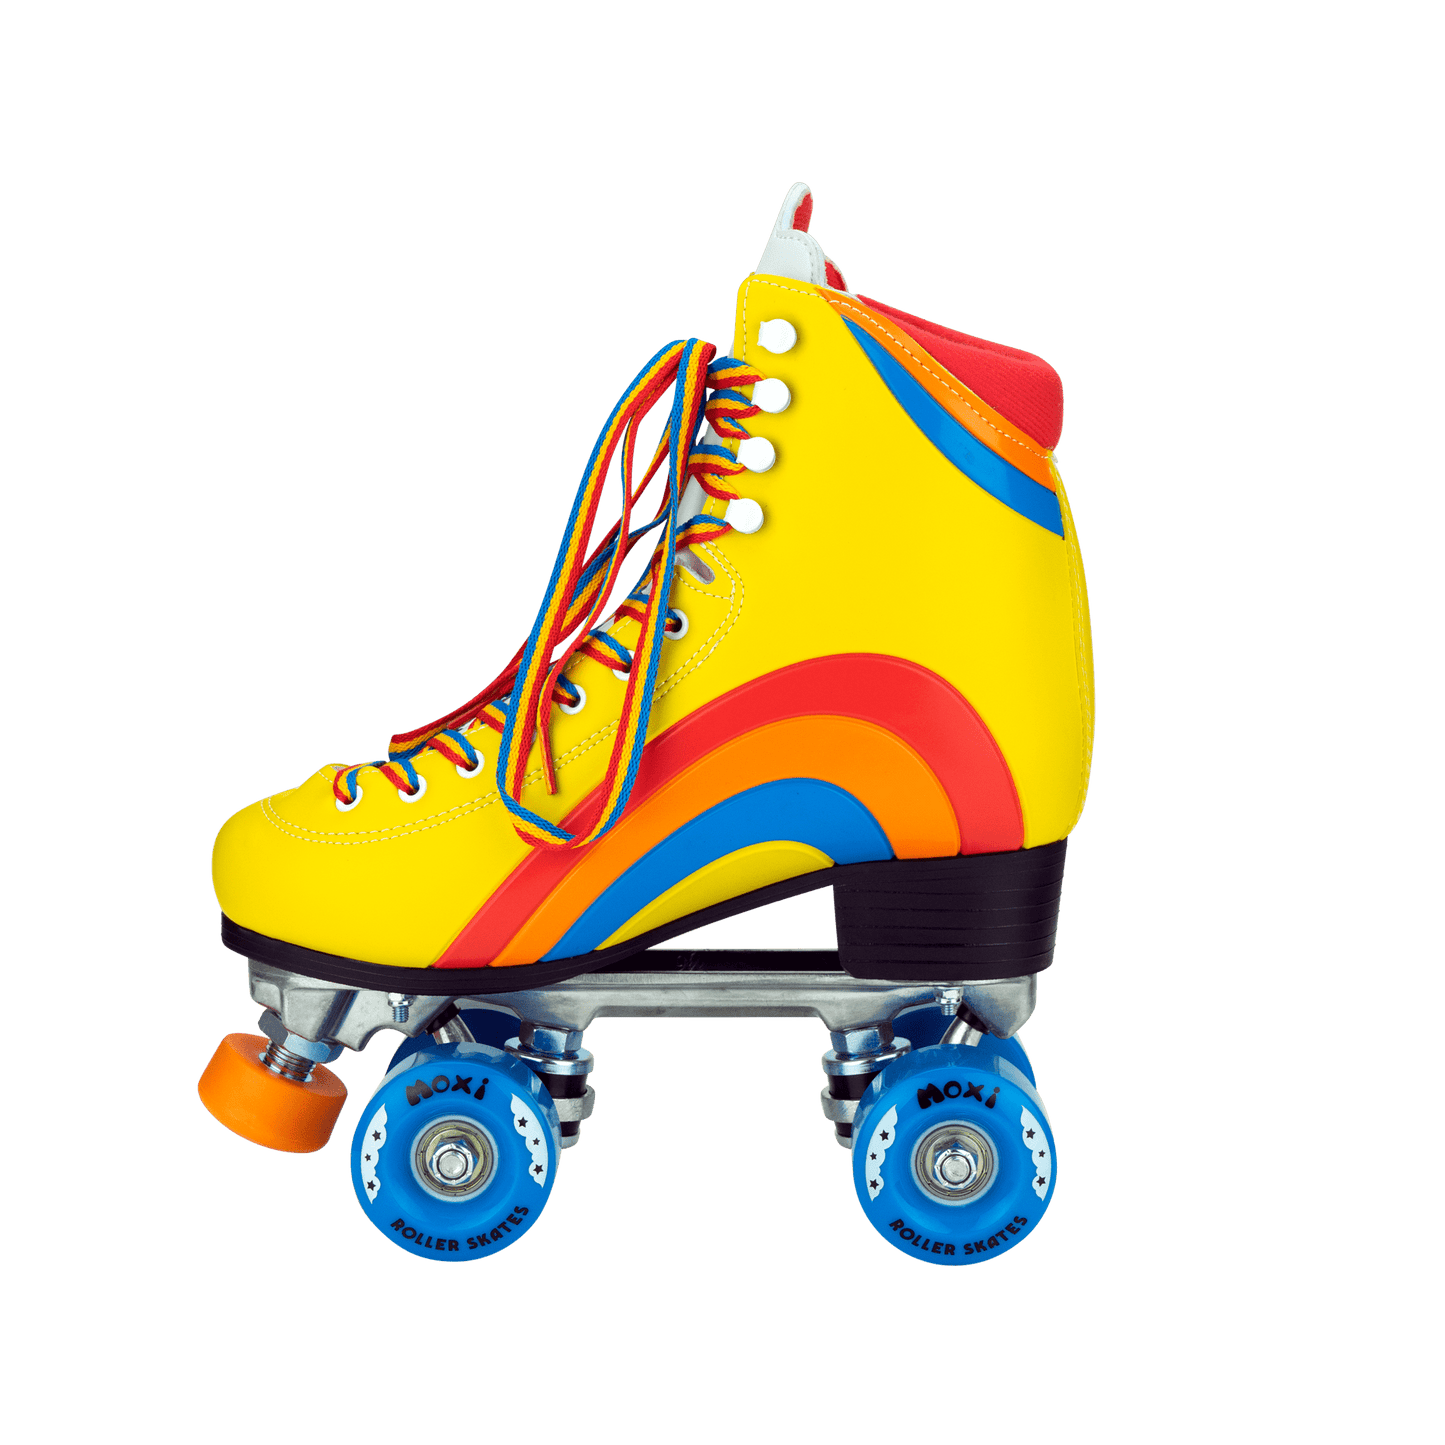 Moxi Rainbow Rider Sunshine Yellow Skates - ON SALE